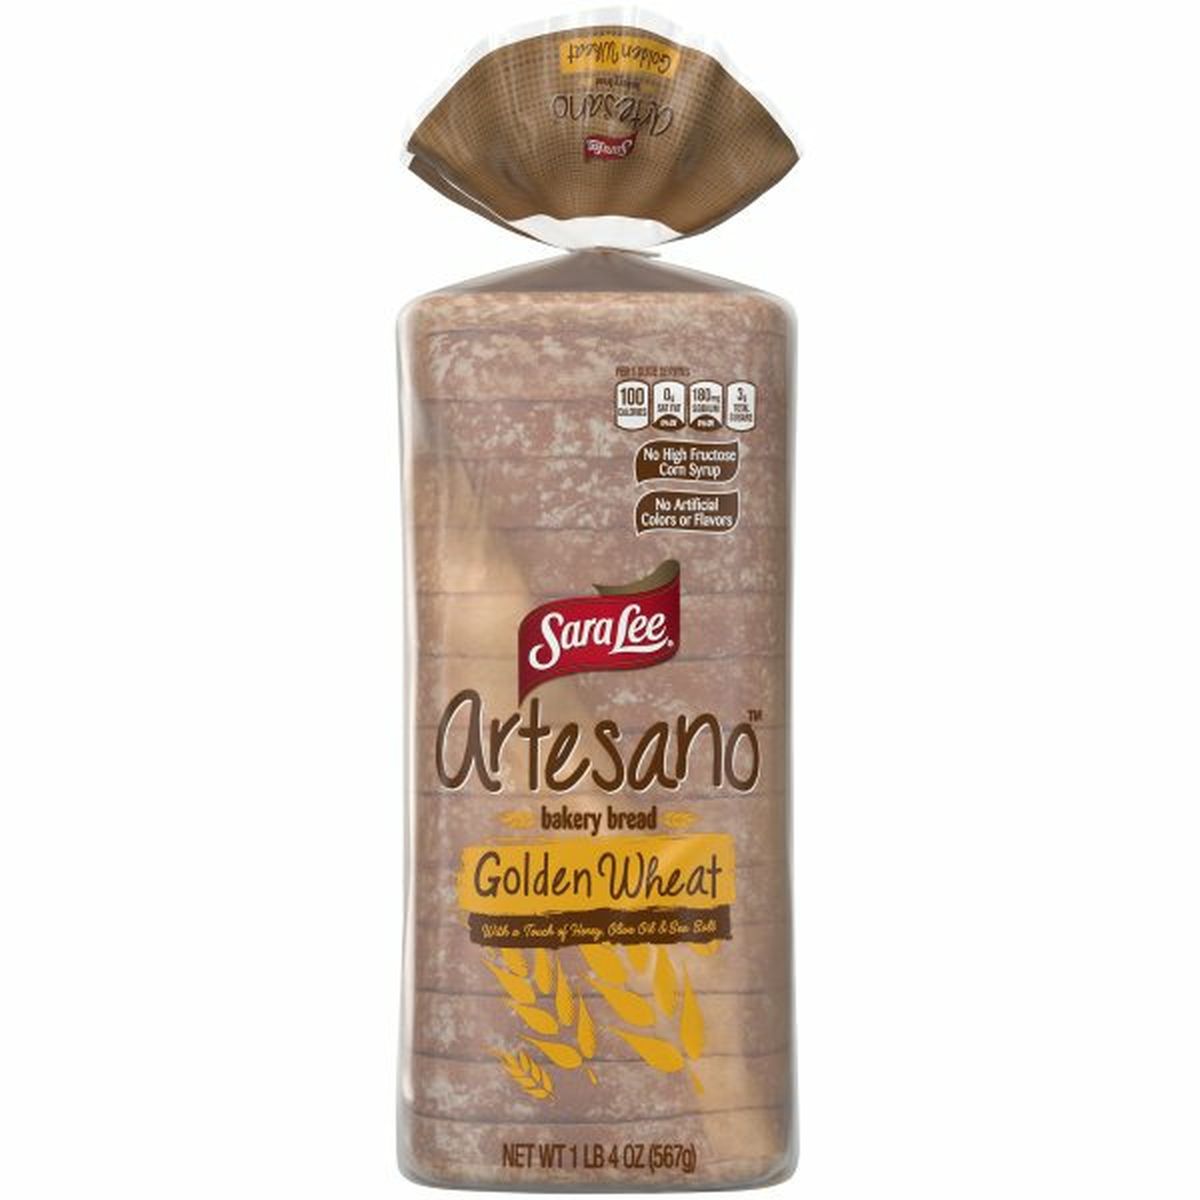 Calories in Sara Lee Artesano Artesano Golden Wheat Bakery Bread